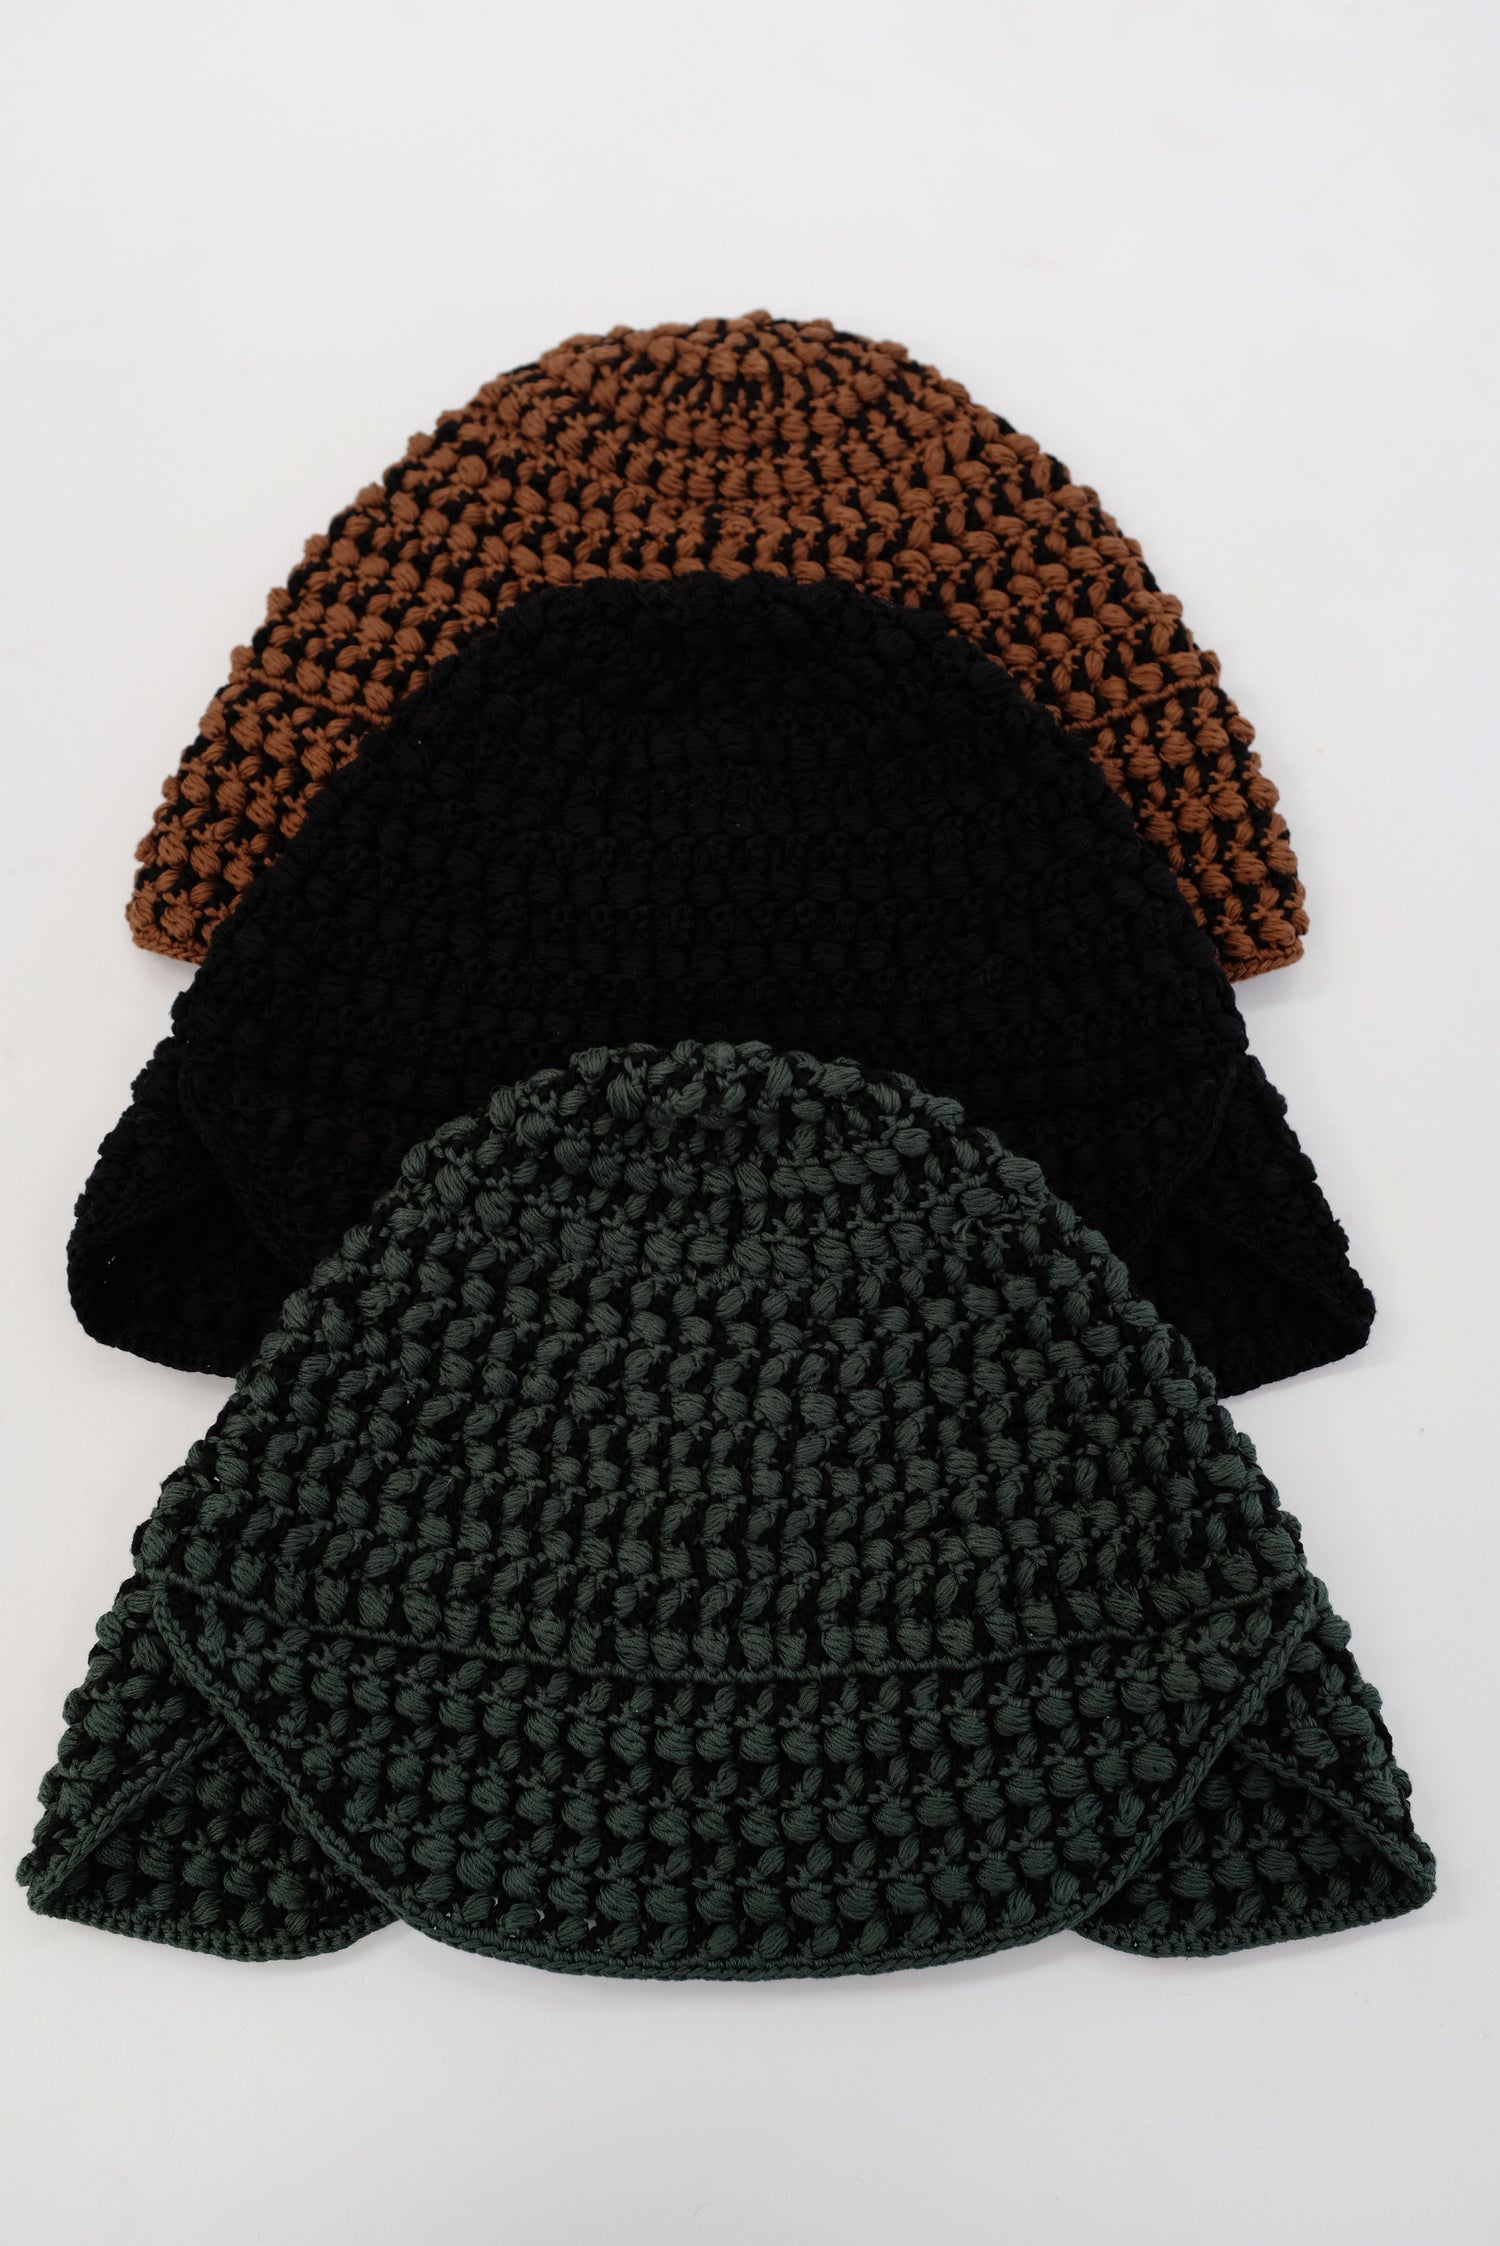 Beklina Crochet Jack Hat